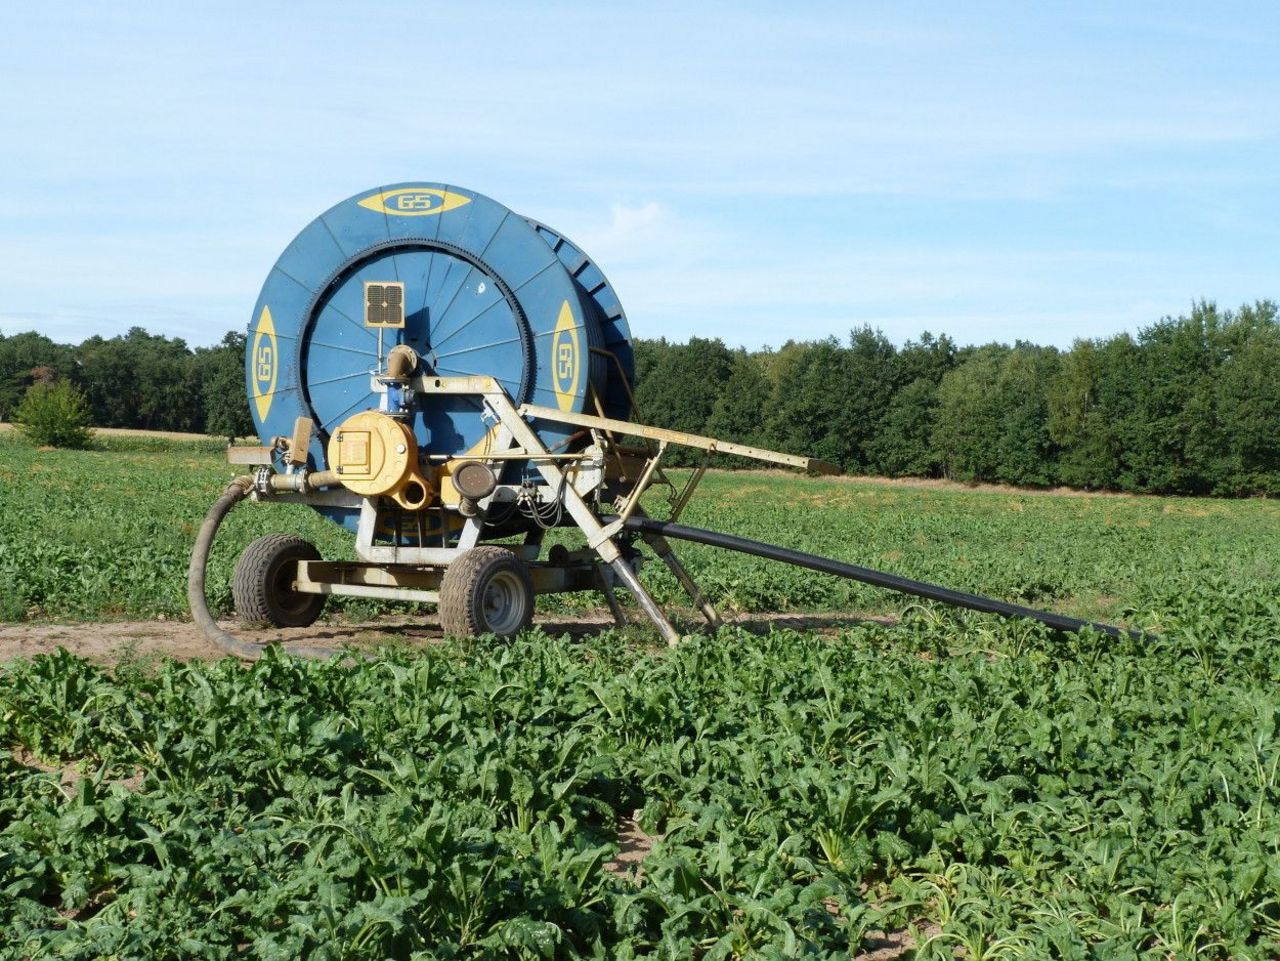 Irrigation of a field wir sugar beets